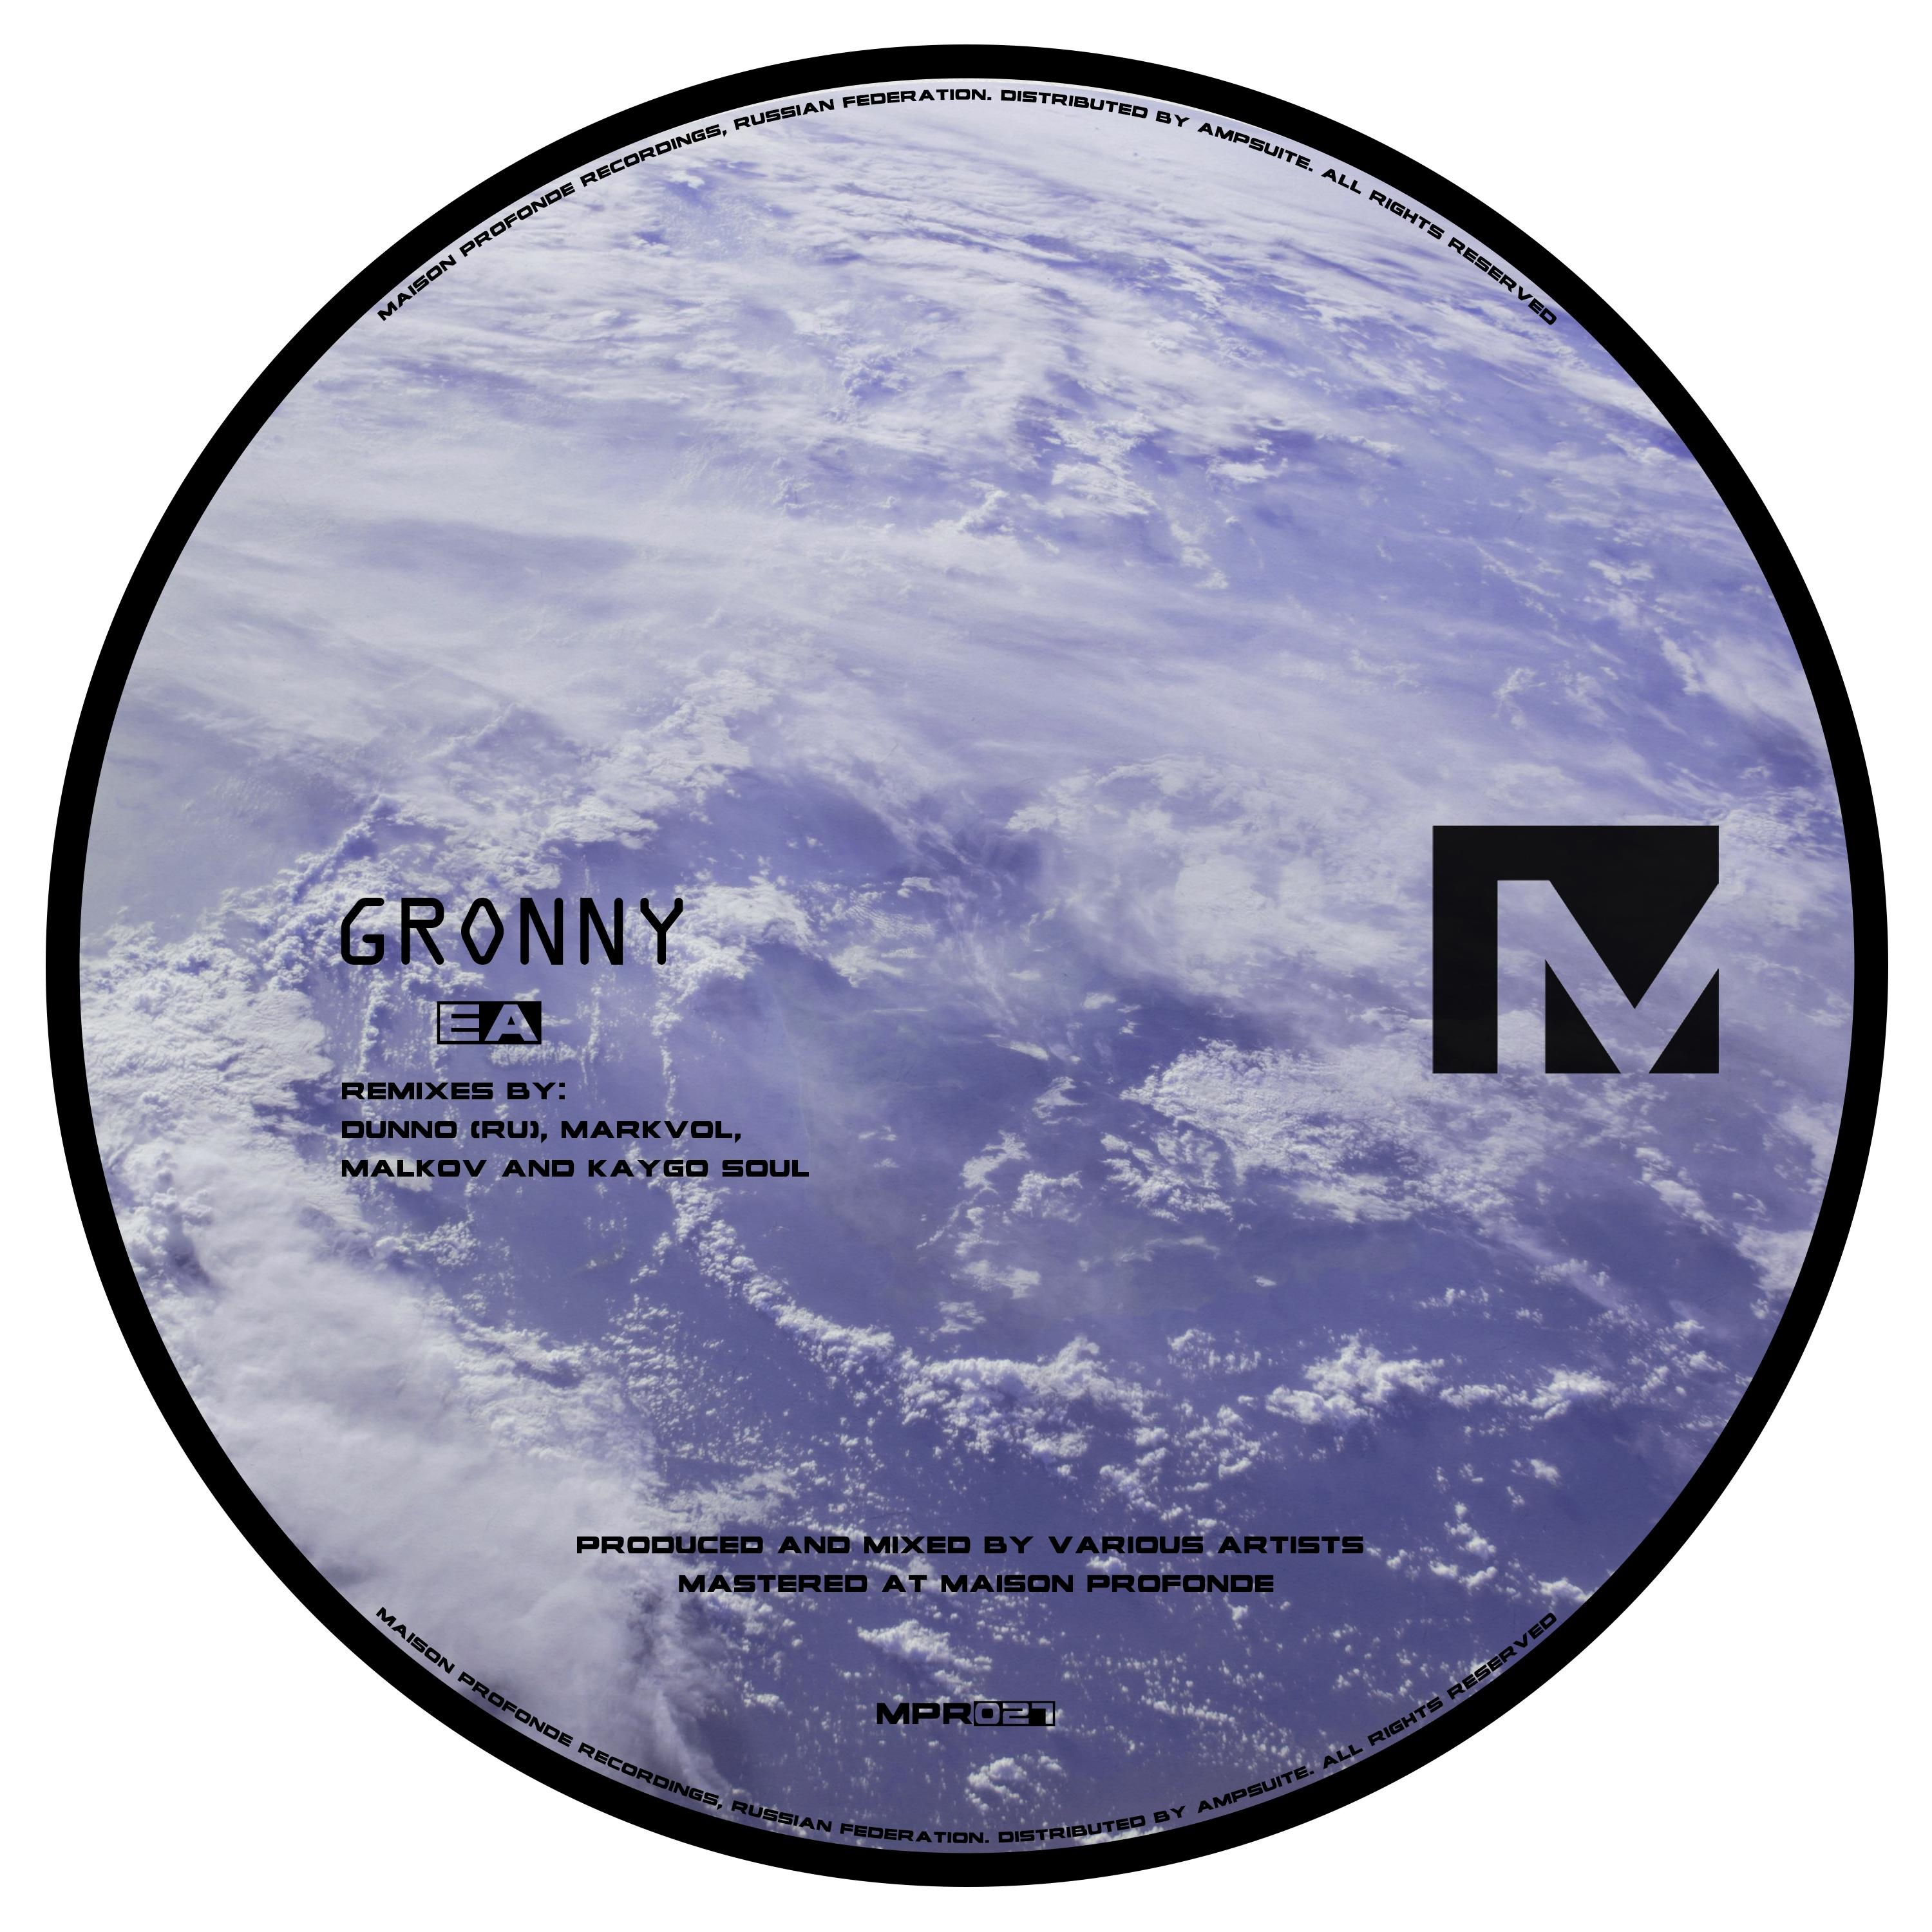 Gronny - Ea (Dunno (RU) Remix)